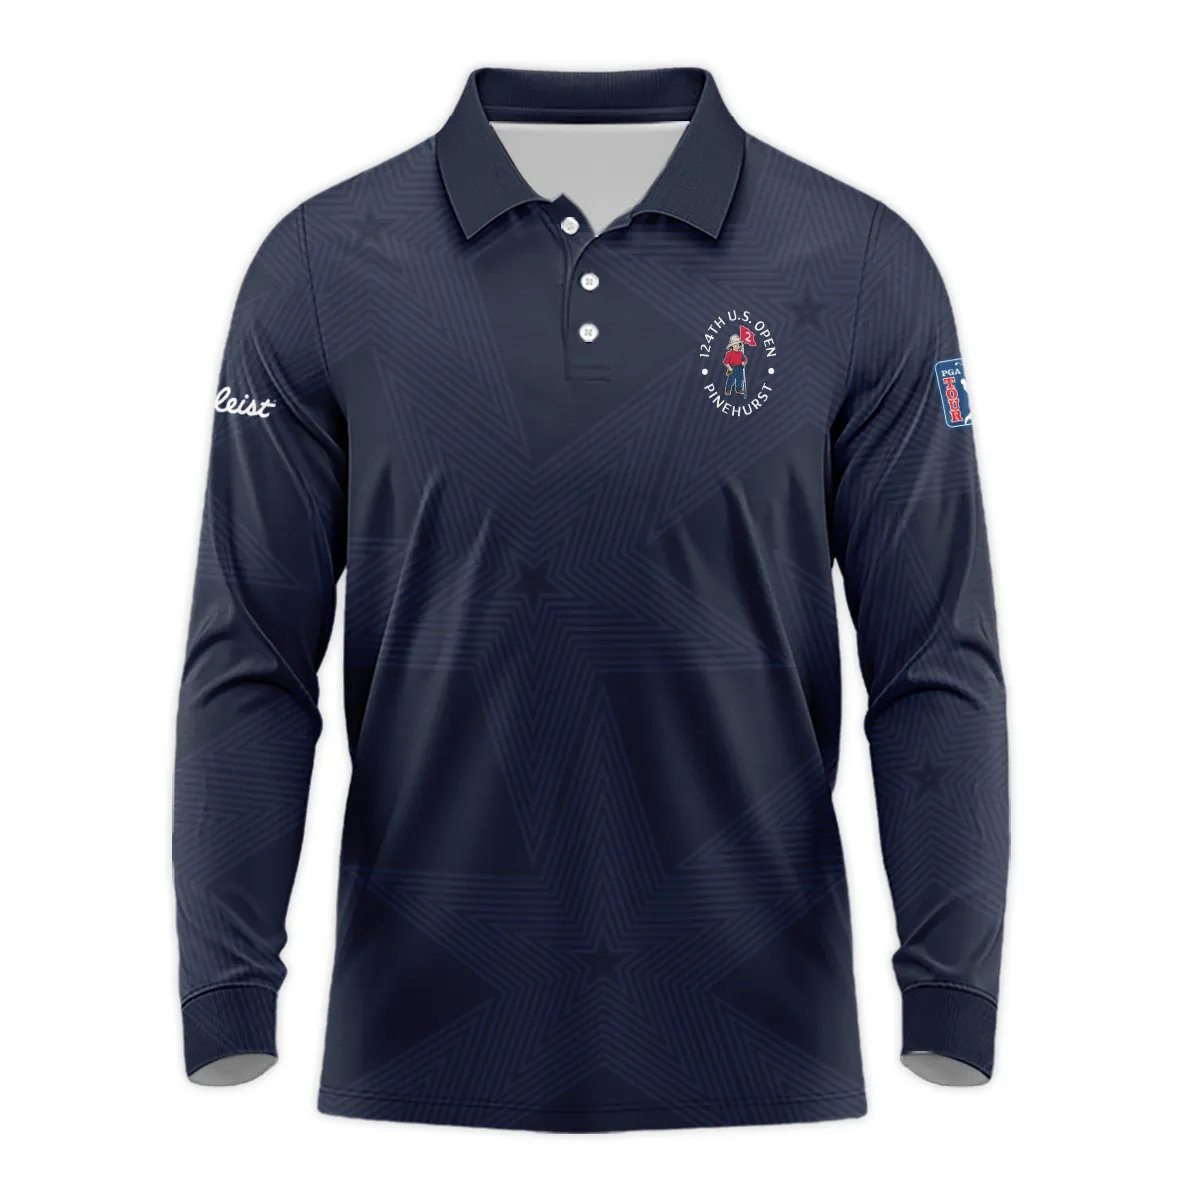 Golf Navy Color Star Pattern 124th U.S. Open Pinehurst Titlest Zipper Hoodie Shirt Style Classic